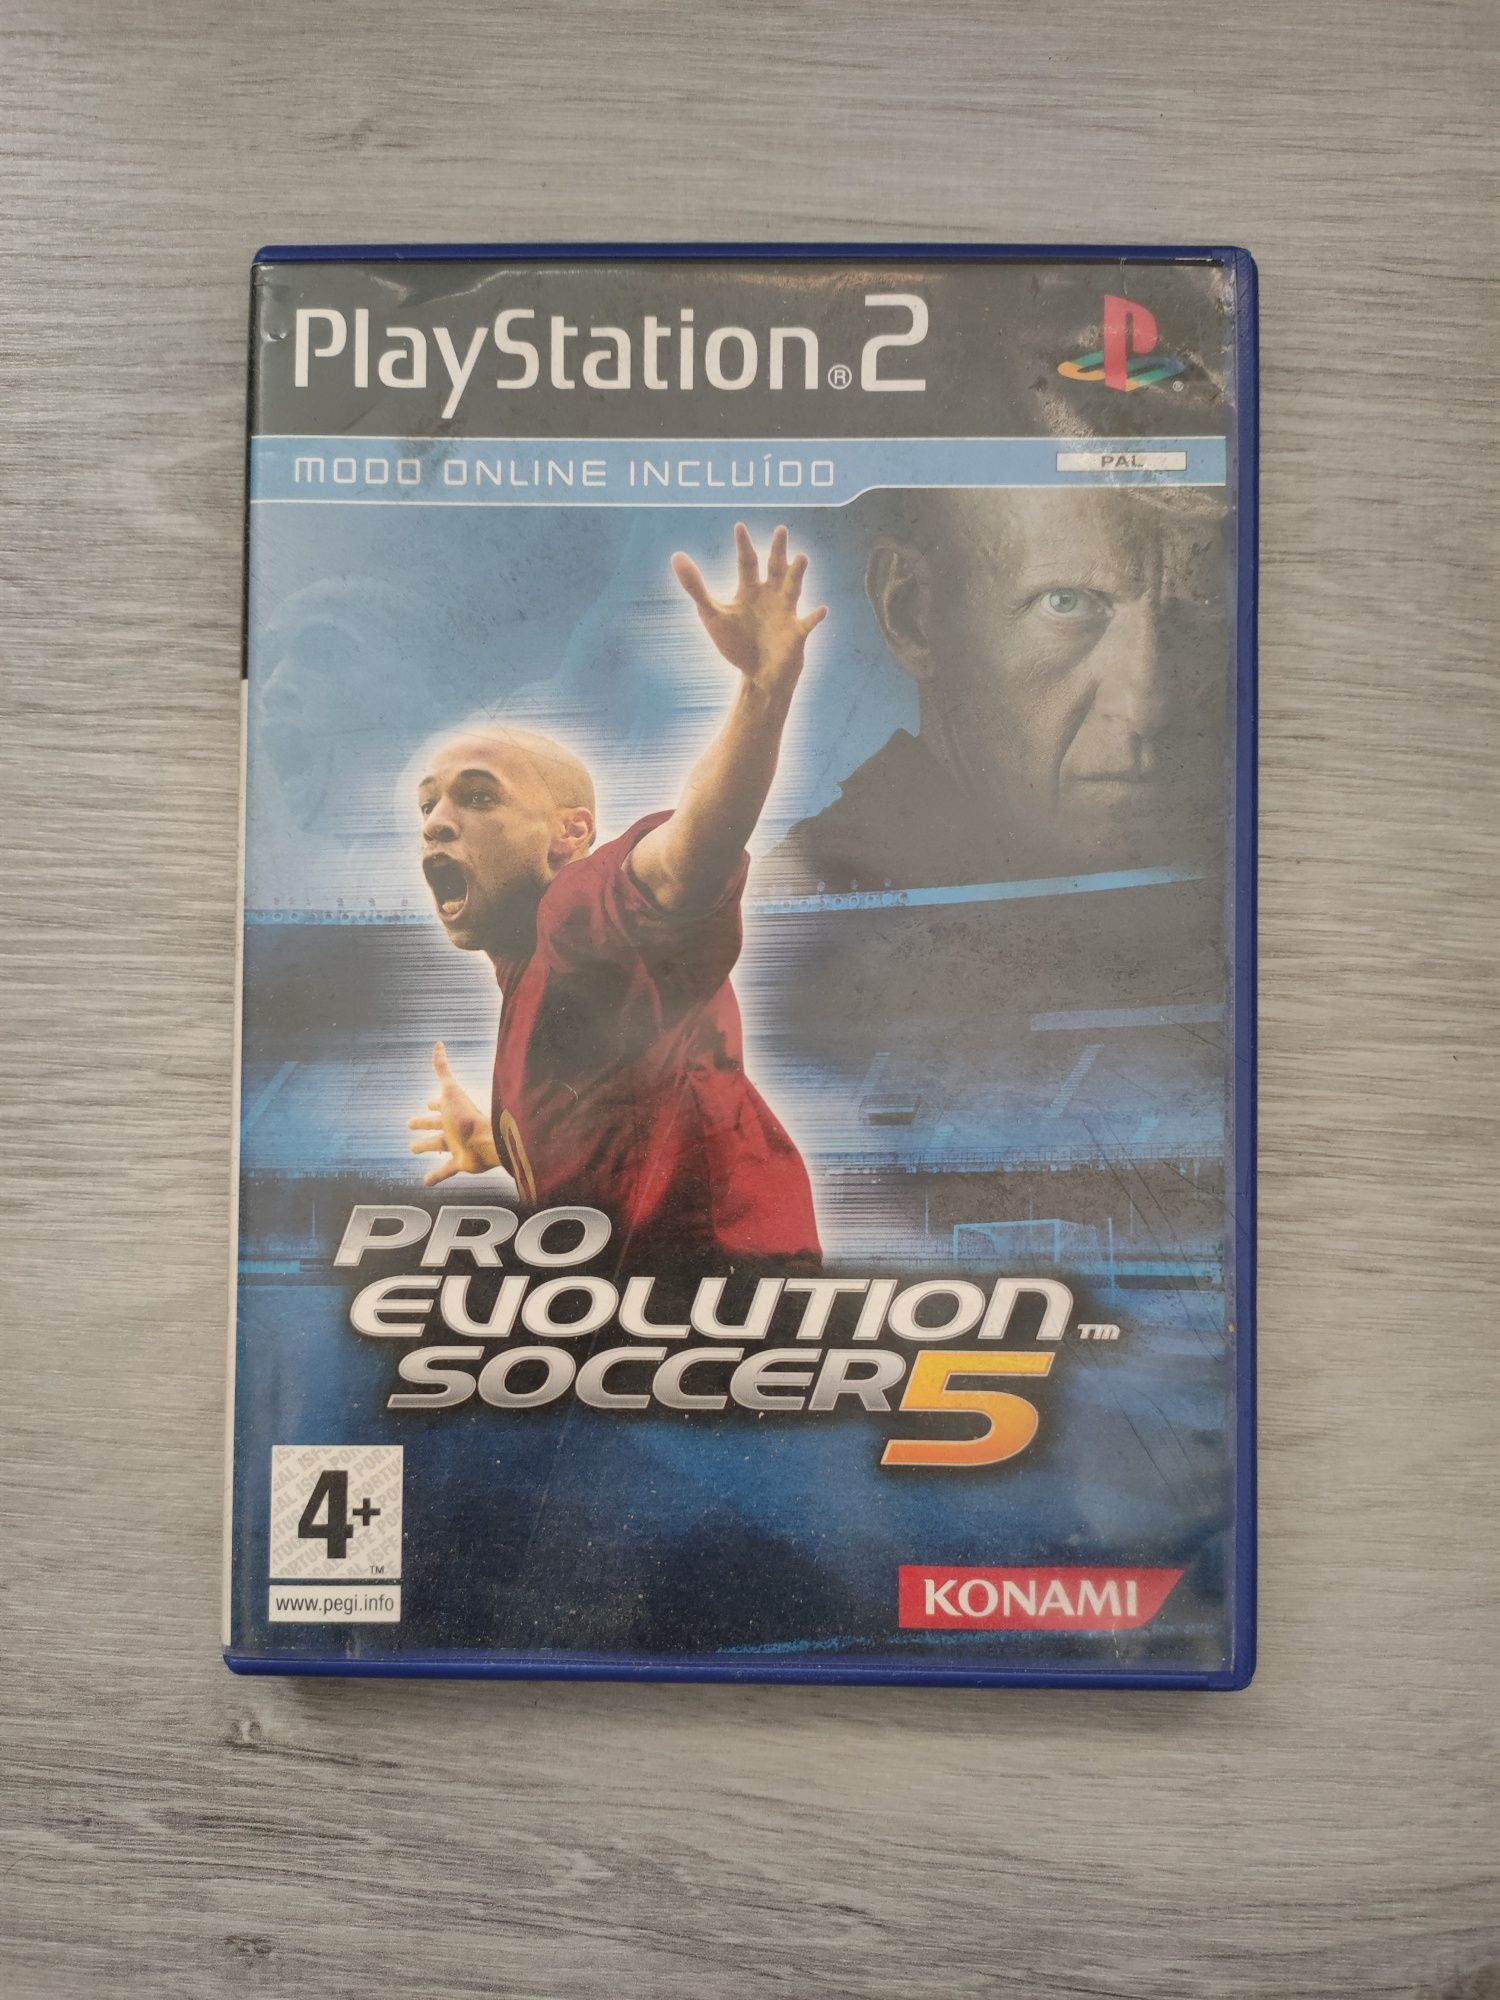 Pro Evolutivon Soccer 5 | PS2